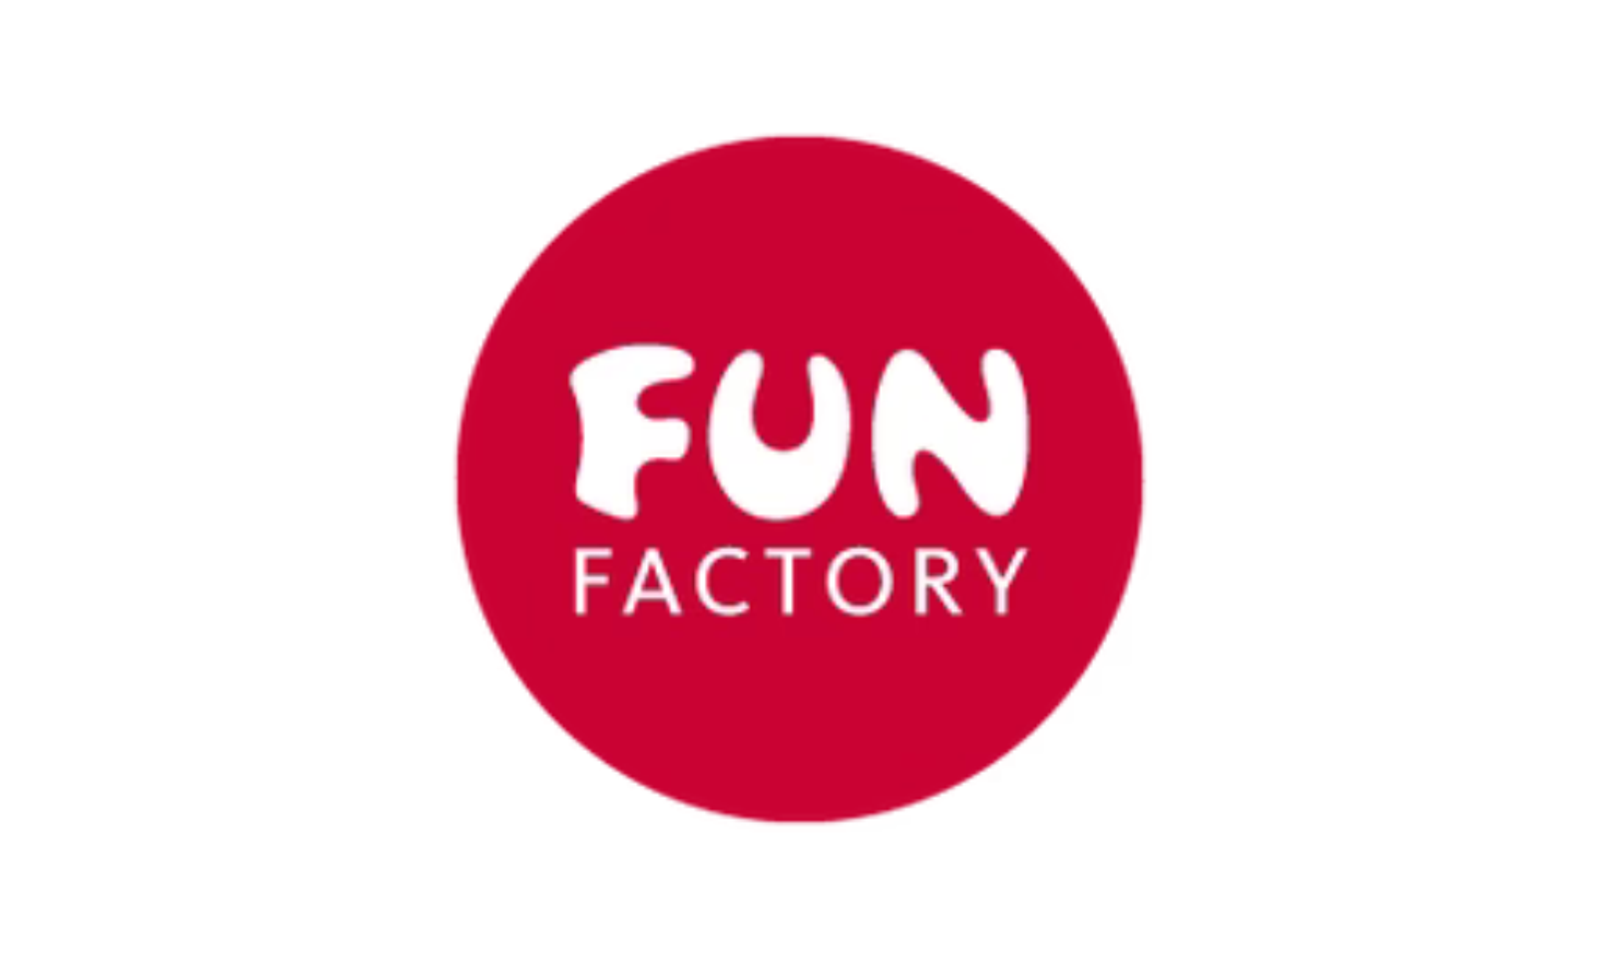 Fun Factory Offering Customizable Kits Following Customer Survey